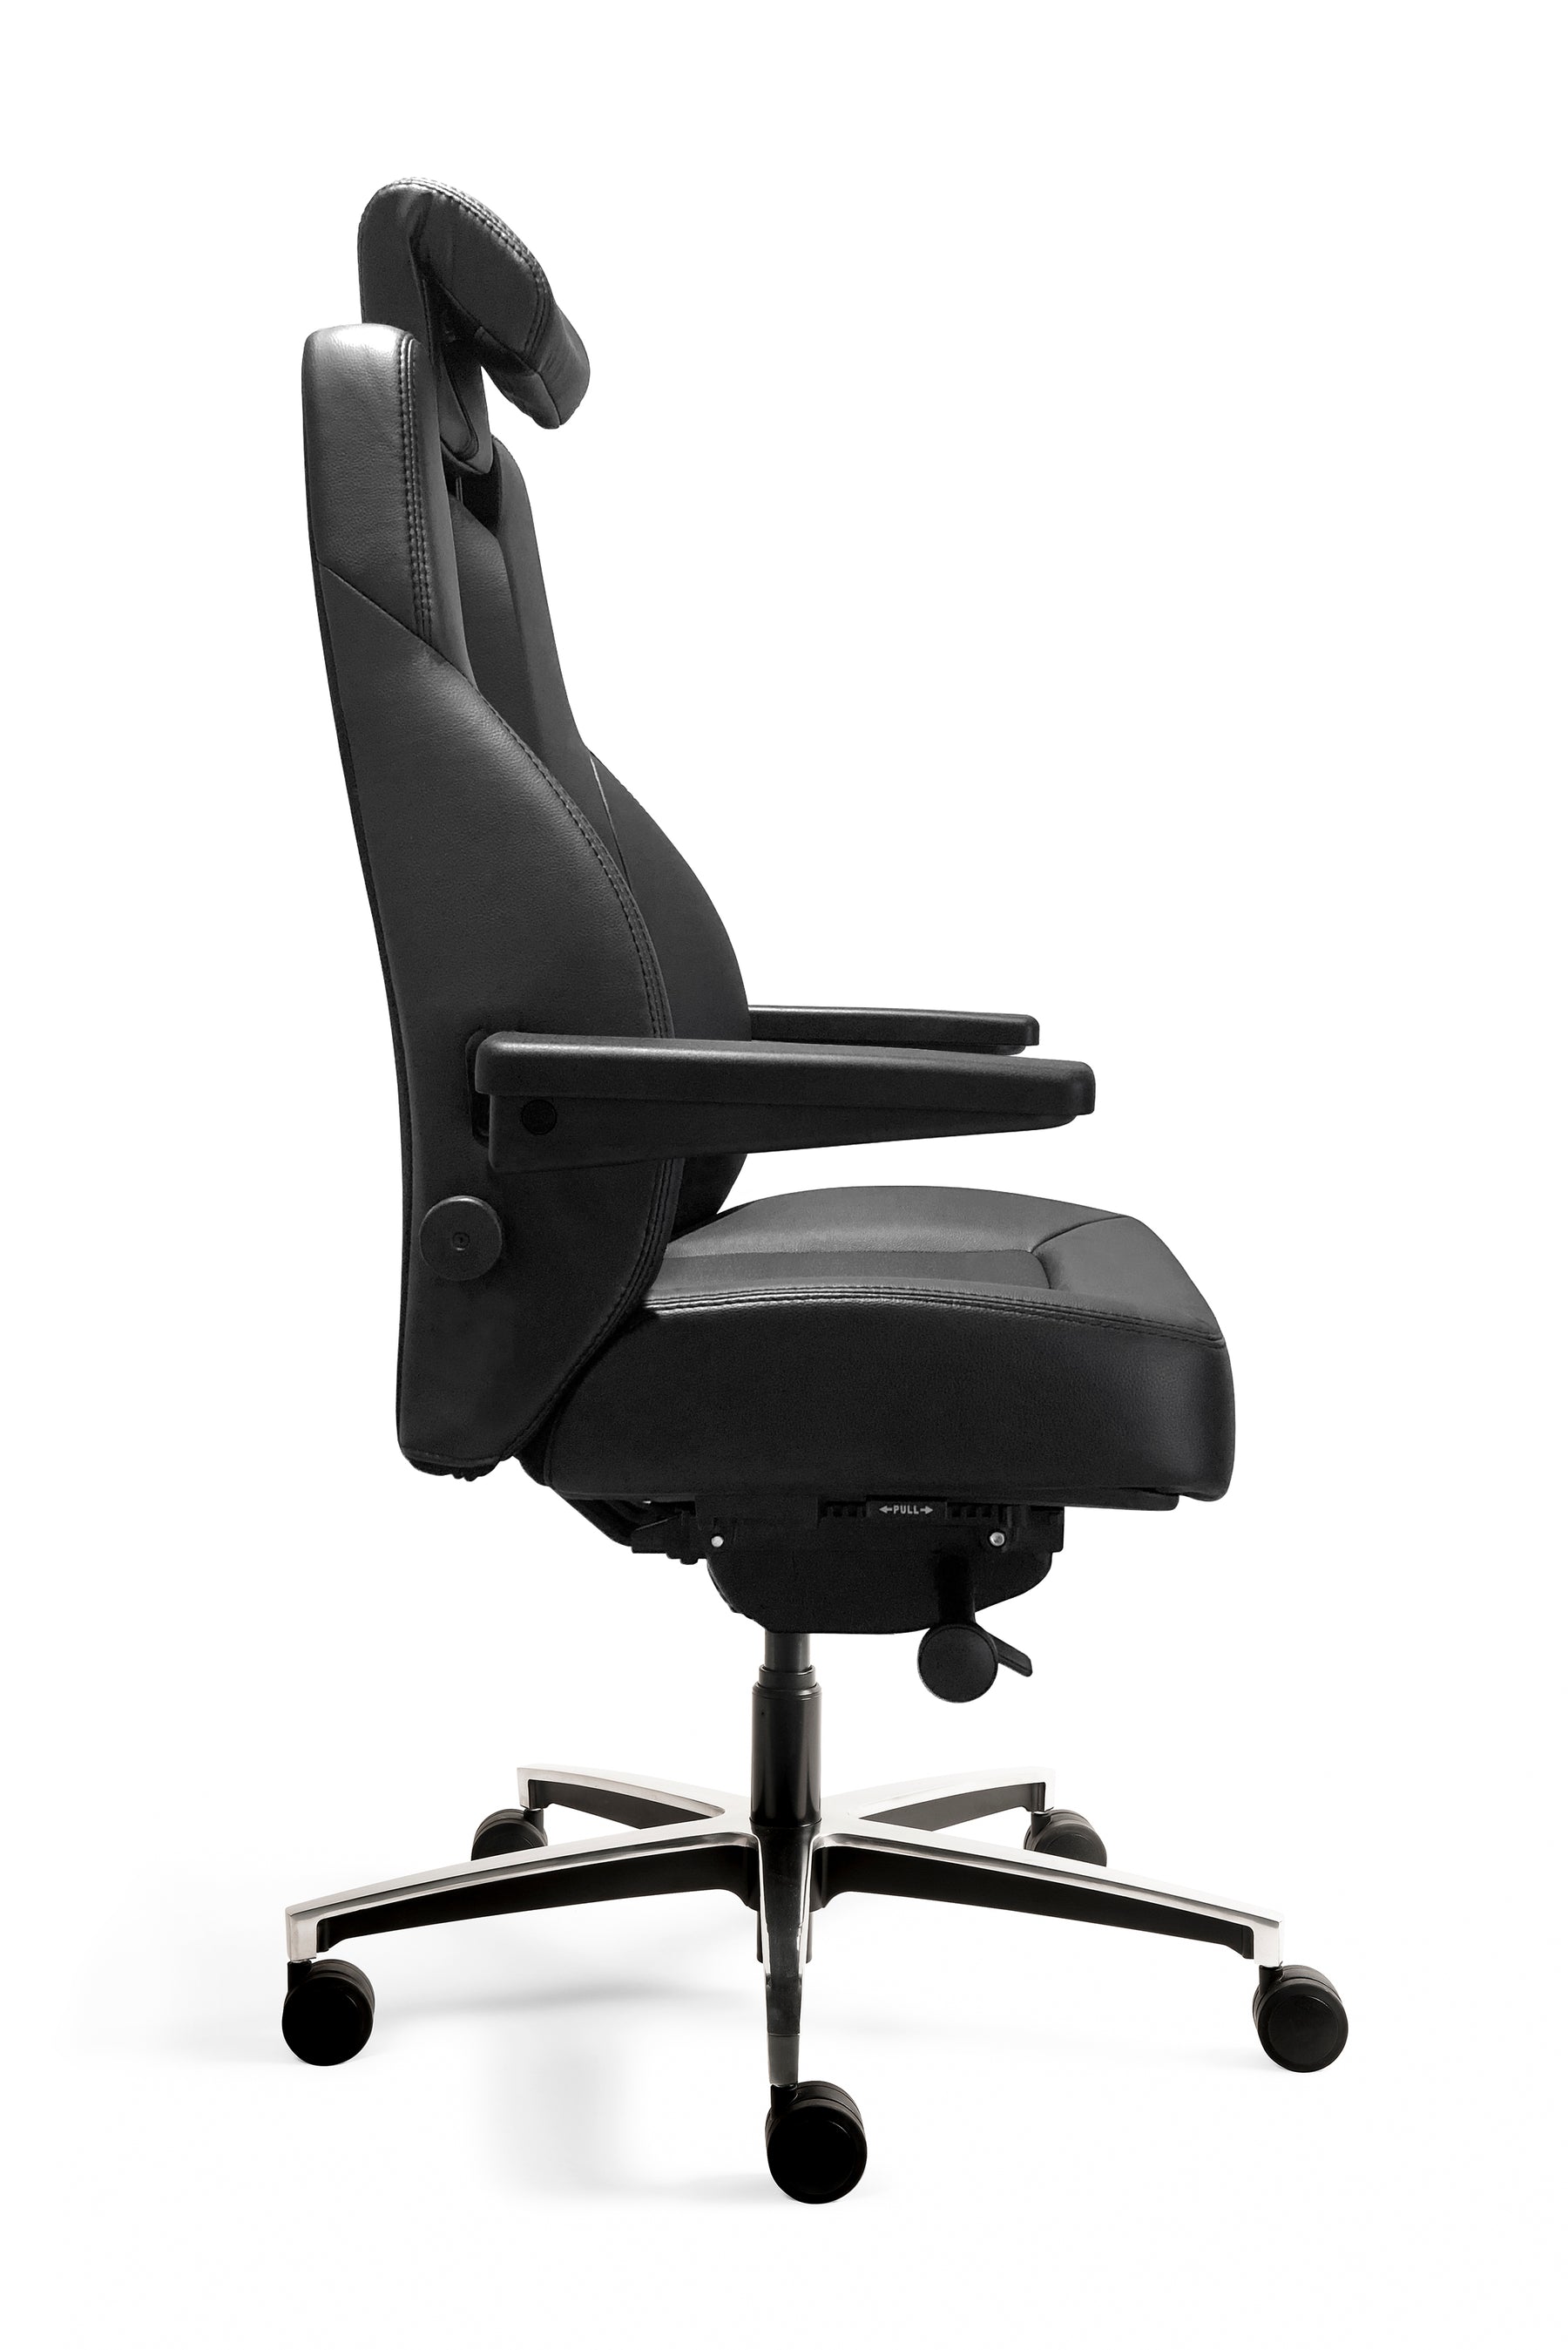 24 timers stol Wulff Premium 24/7 stol - Svart Lær